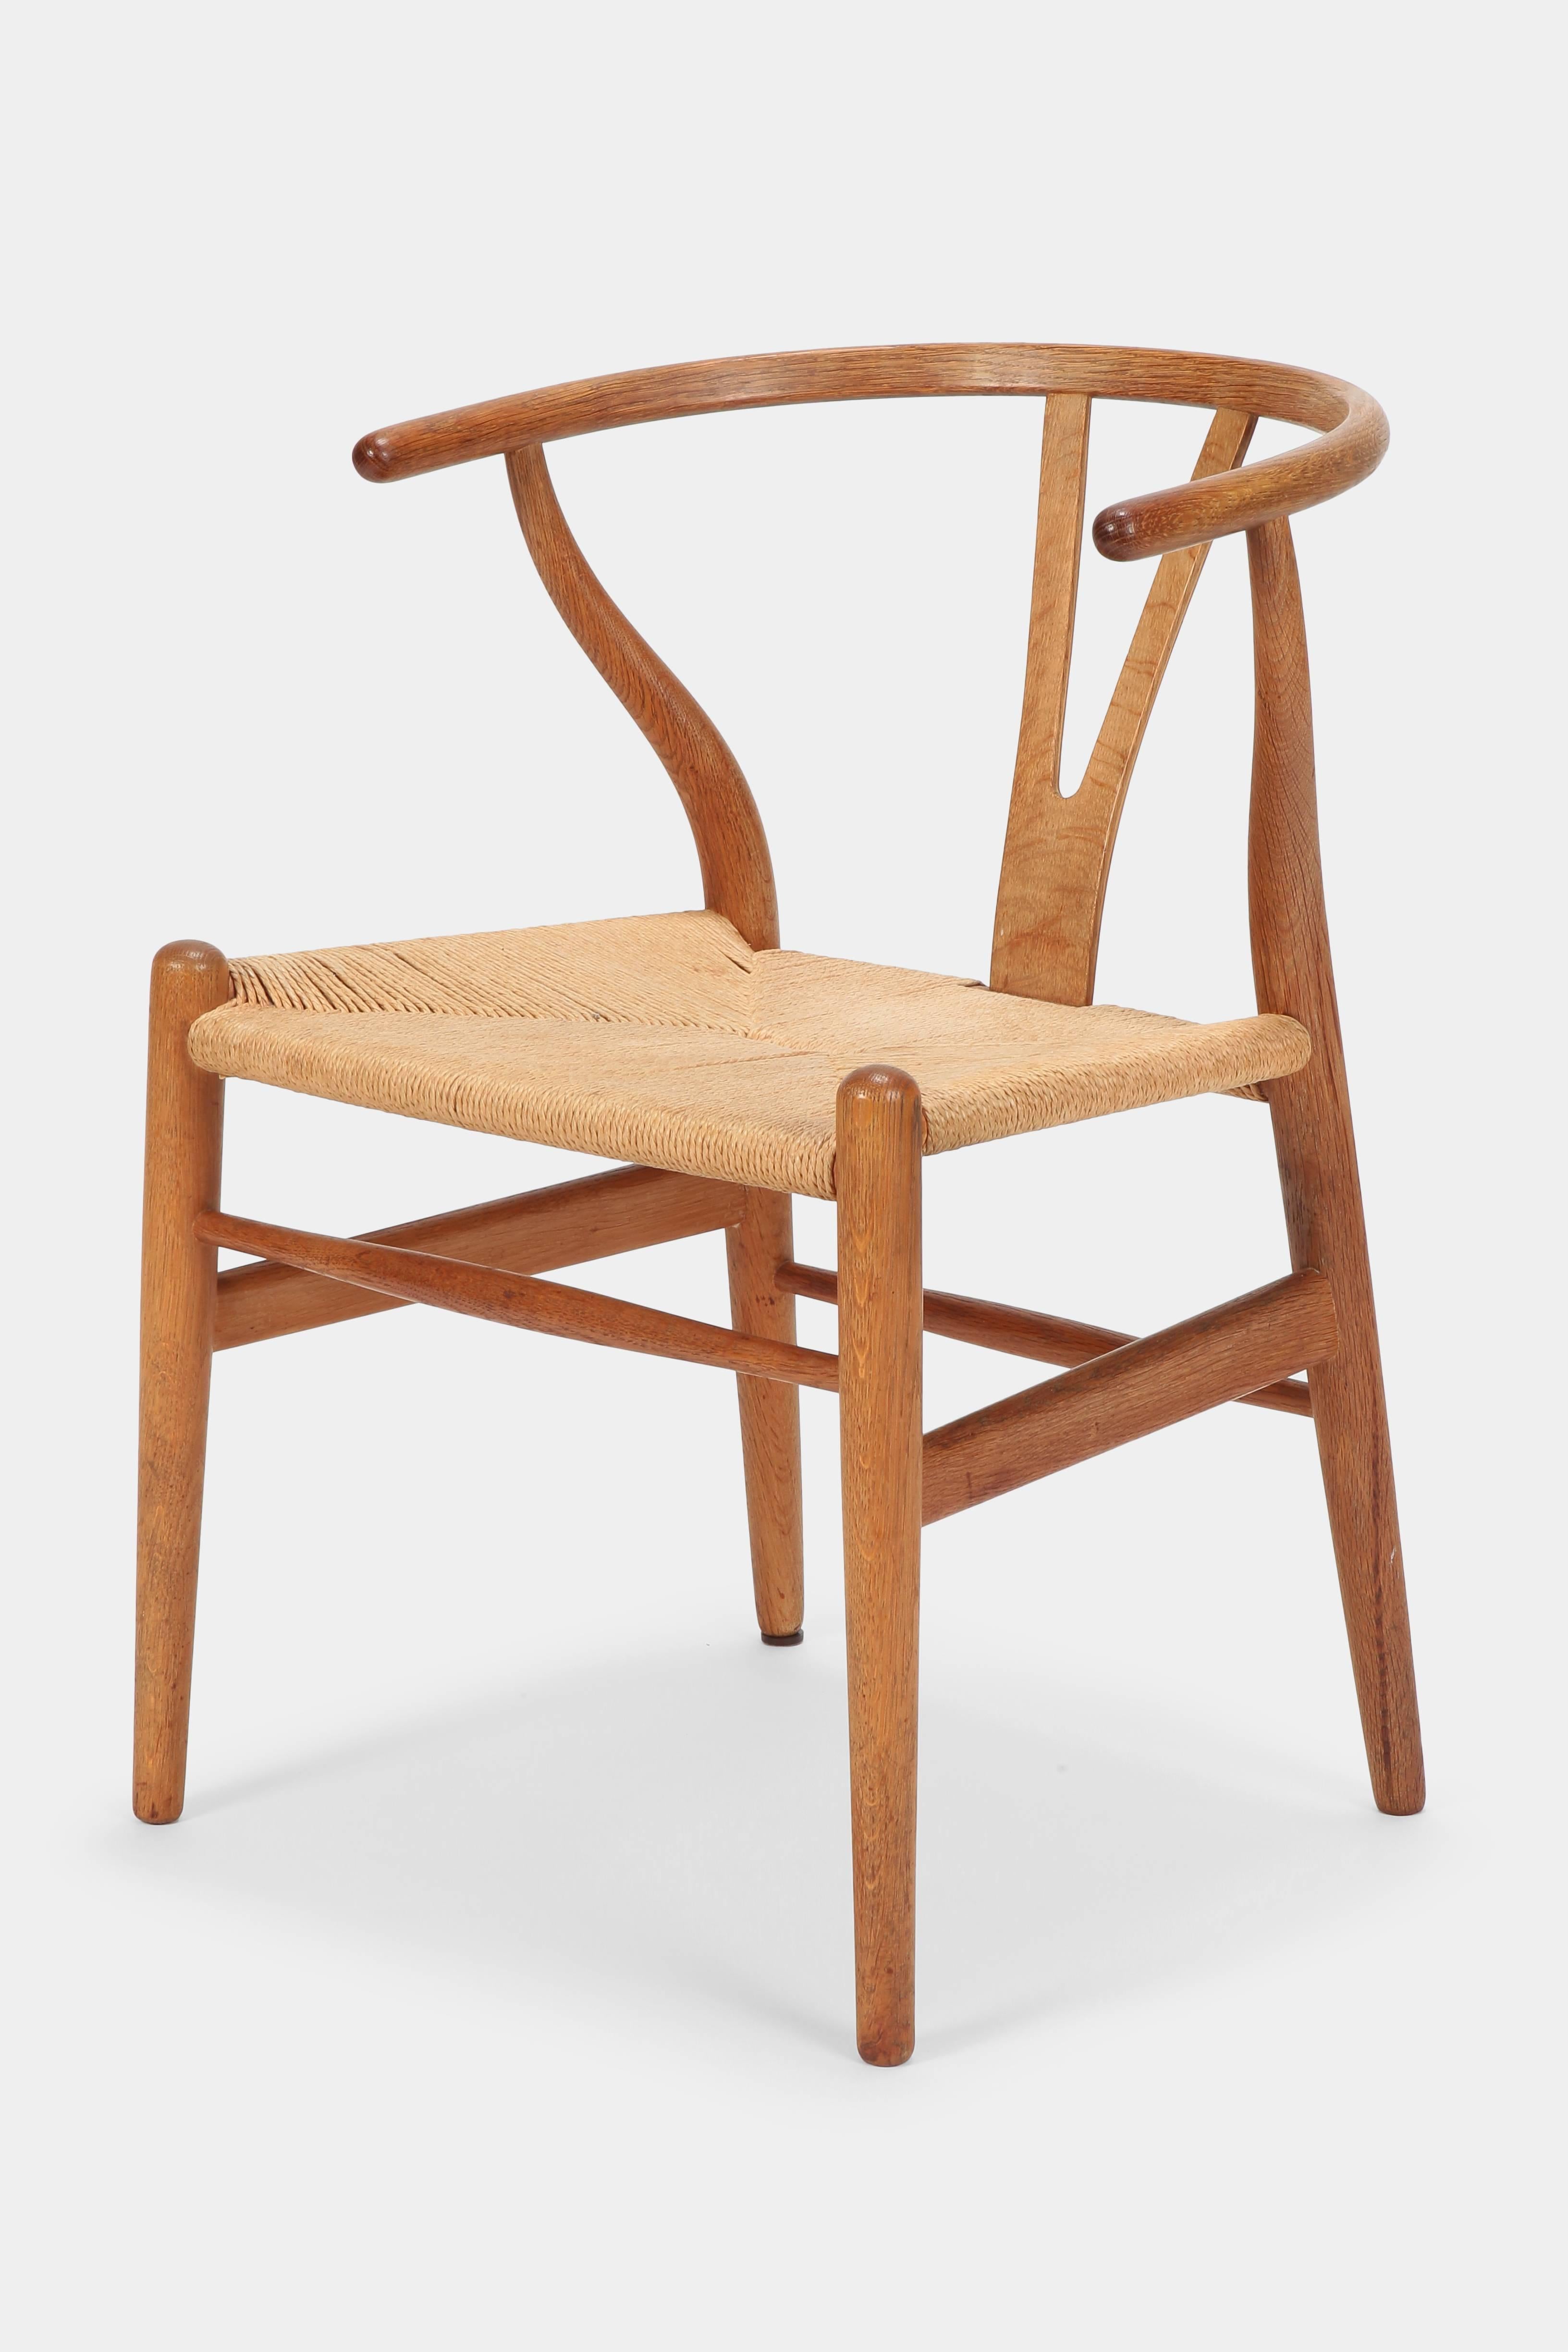 Hans J. Wegner “Y-Chairs” Model CH24 Carl Hansen & Son, 1950s 1